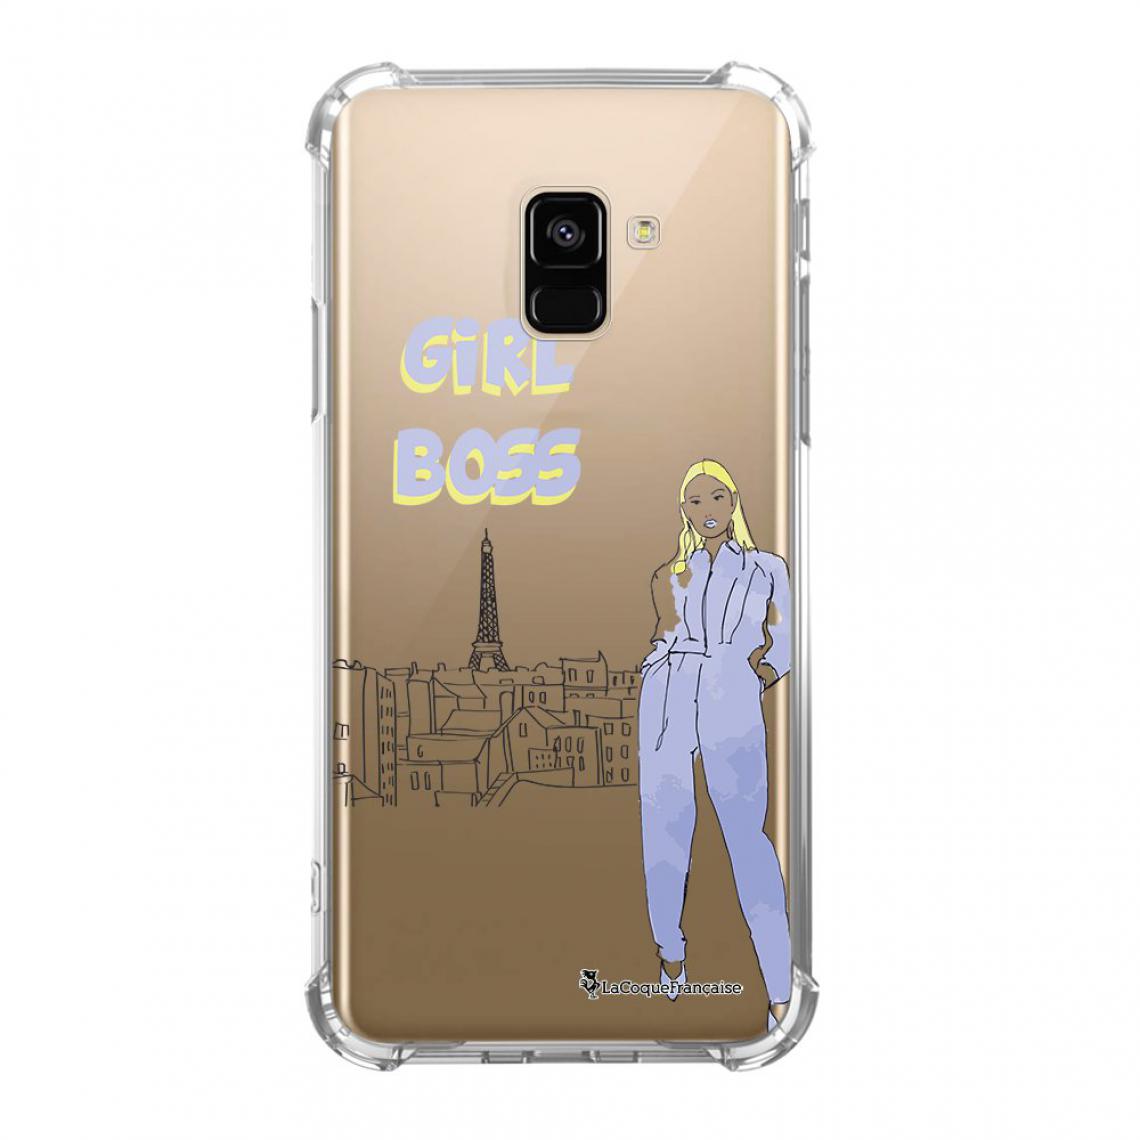 La Coque Francaise - Coque Samsung Galaxy A8 2018 silicone anti-choc souple angles renforcés transparente - Coque, étui smartphone